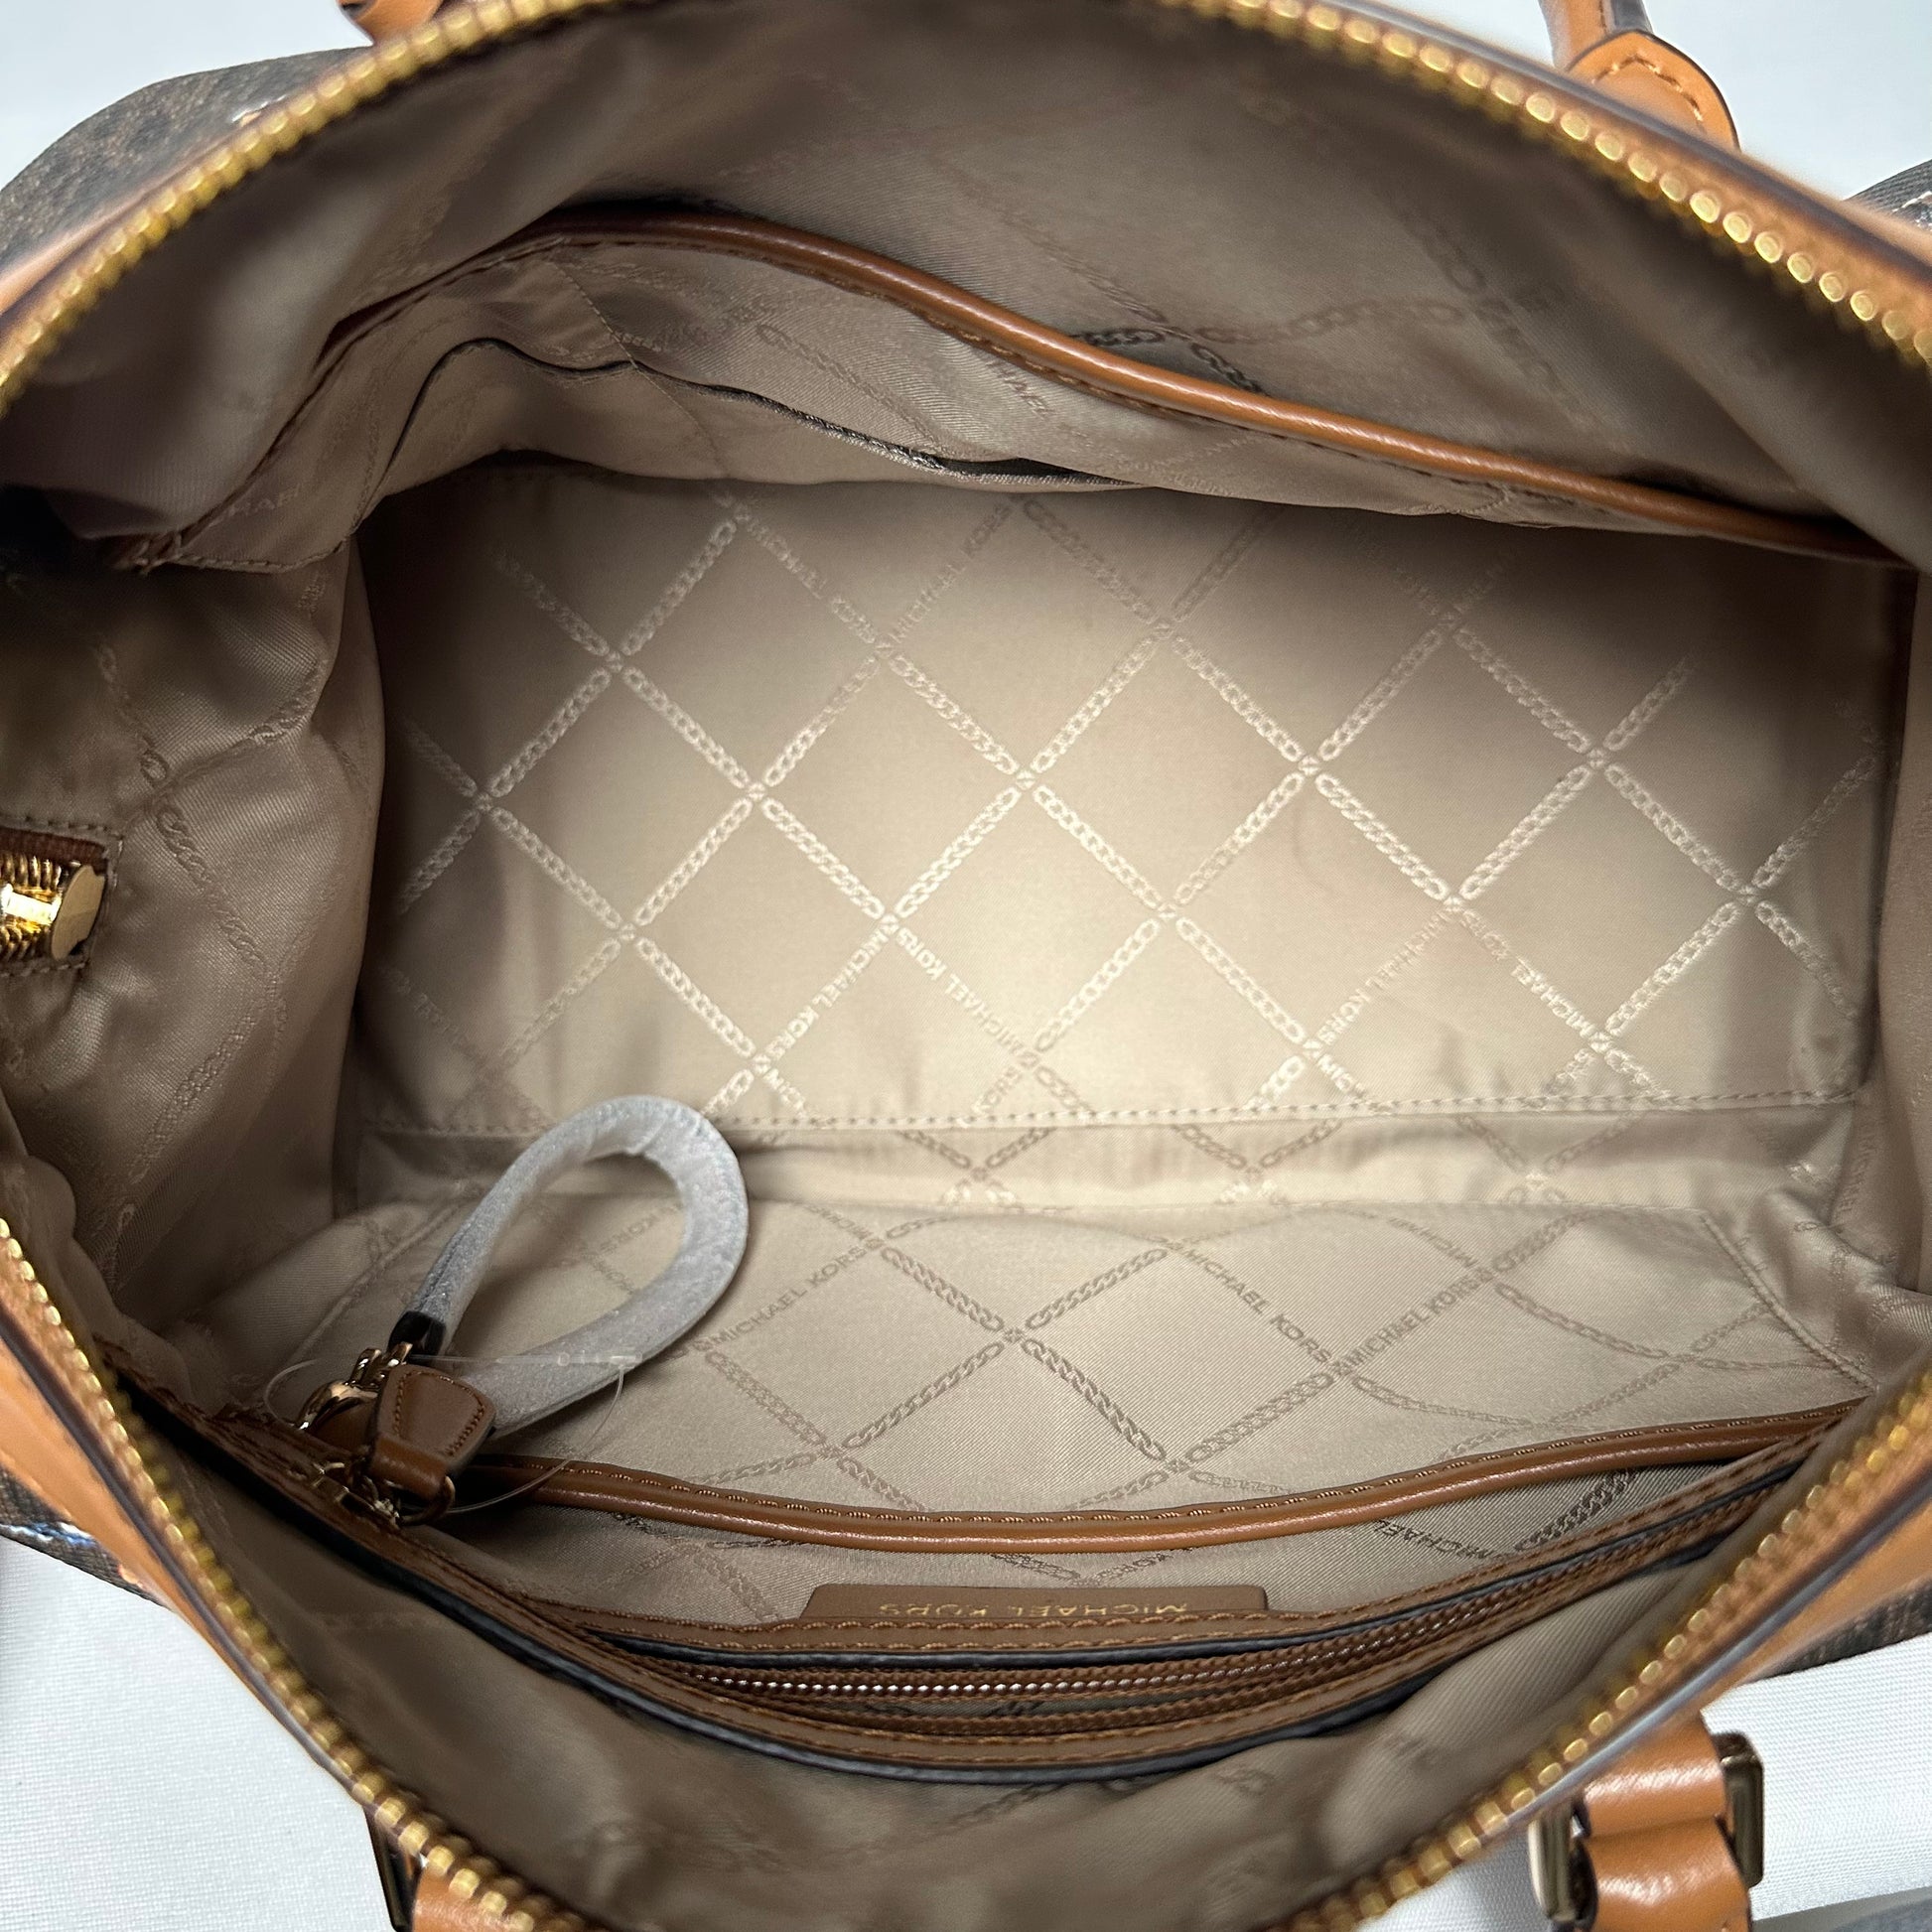 Michael Kors Authenticated Bedford Handbag